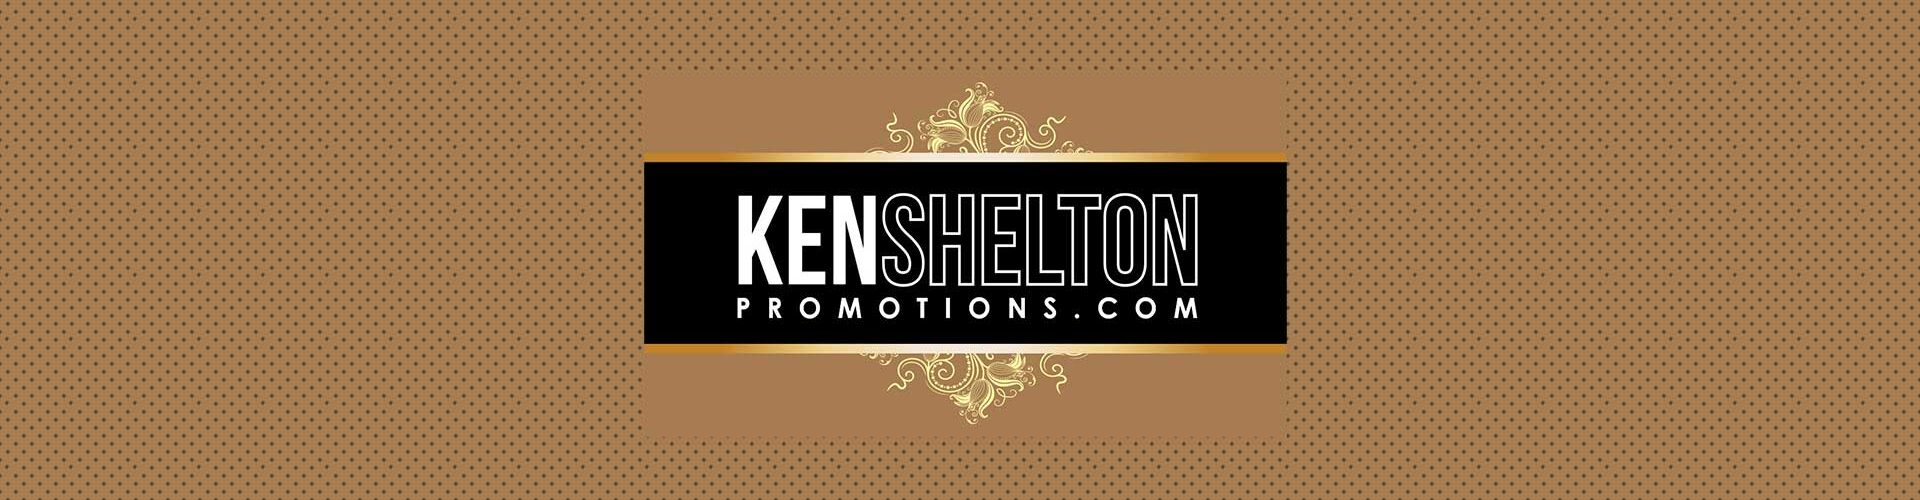 Ken-Shelton-Header